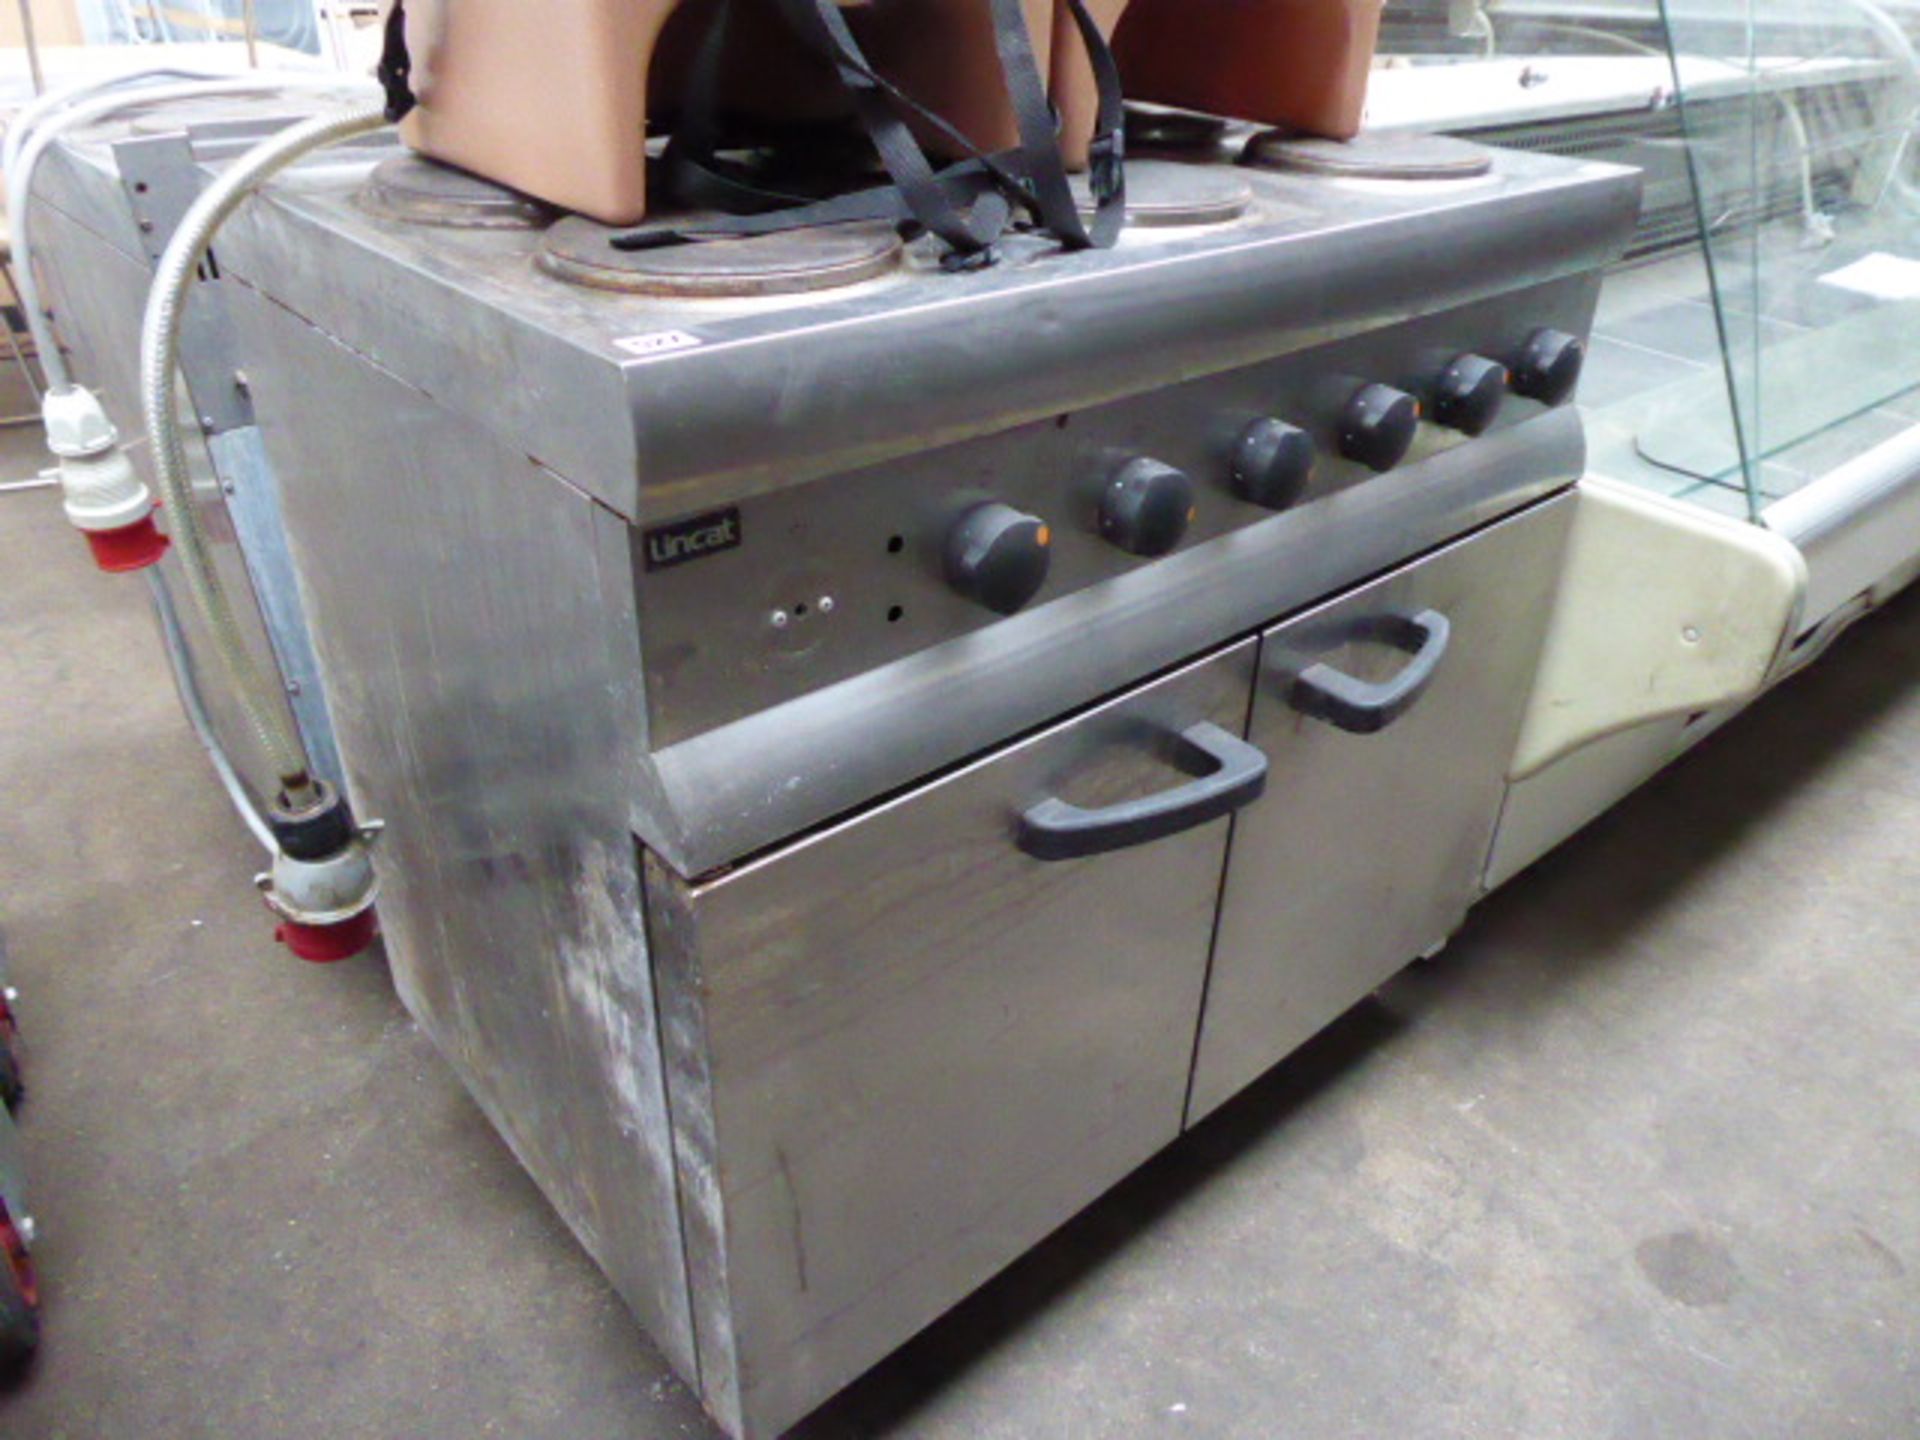 90cm electric Lincat 6 ring stove with 2 door oven under